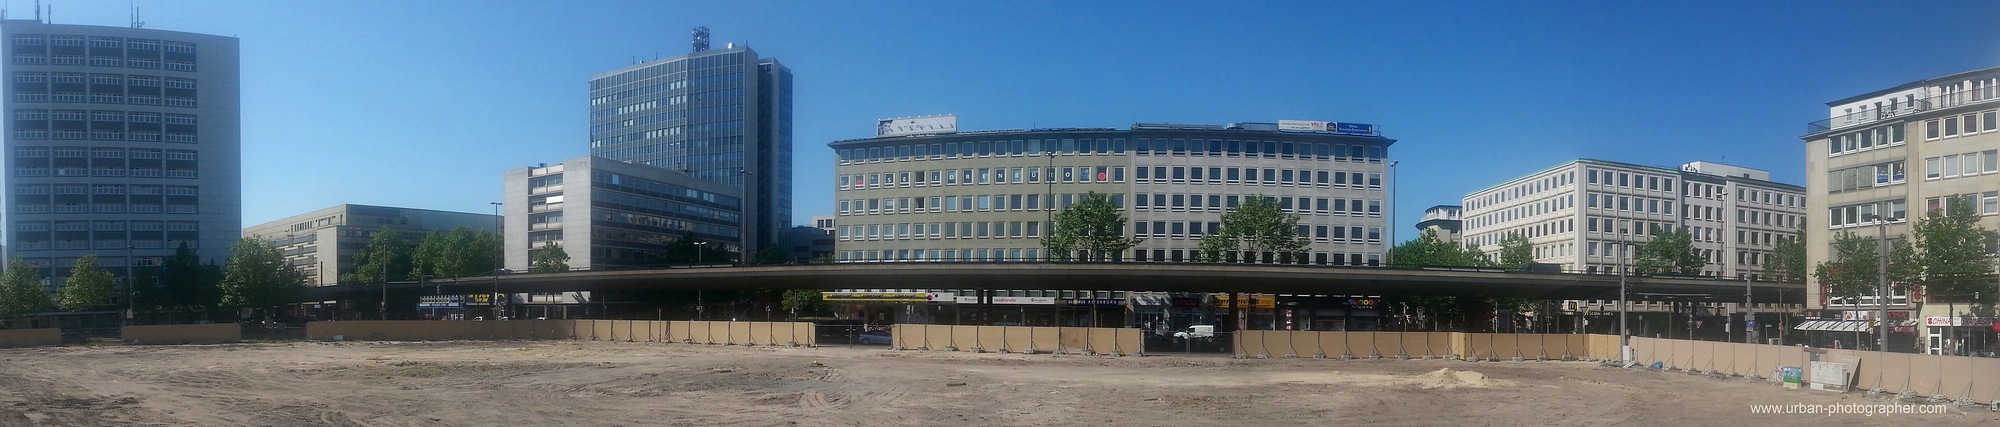 Baustelle Bahnhofsplatz 4